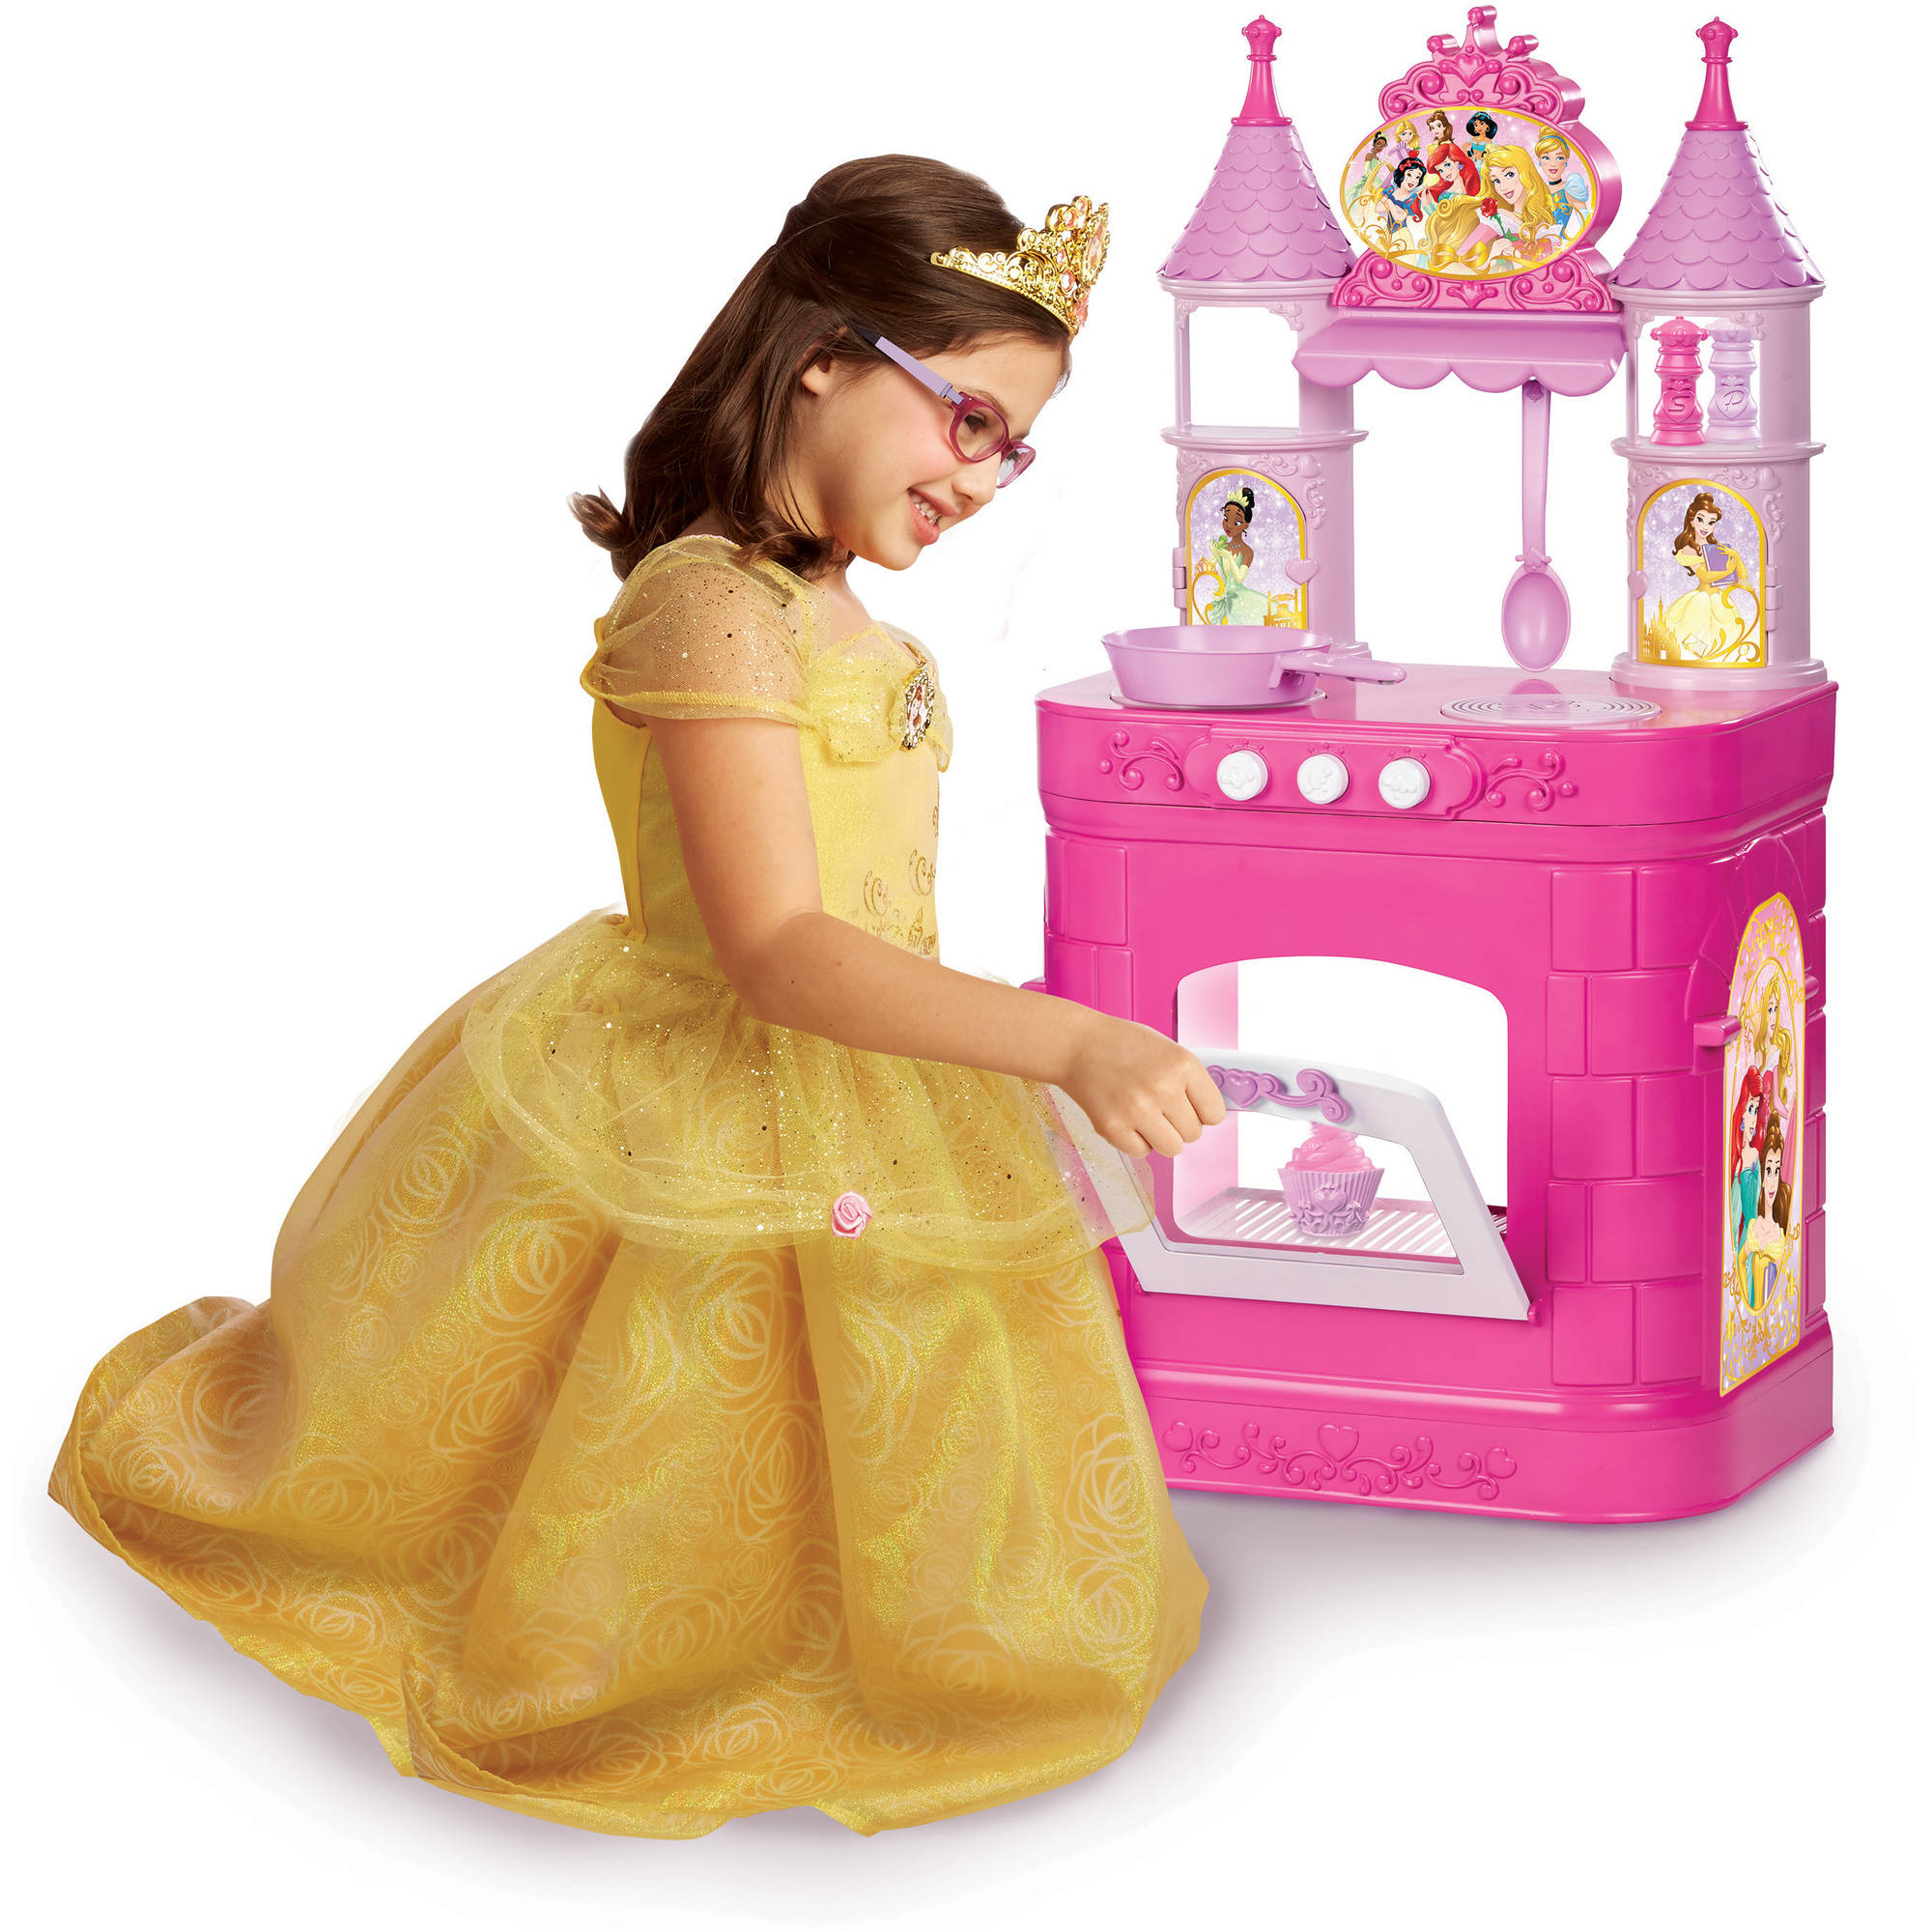 Disney Princess Magical Play Kitchen - image 2 of 5